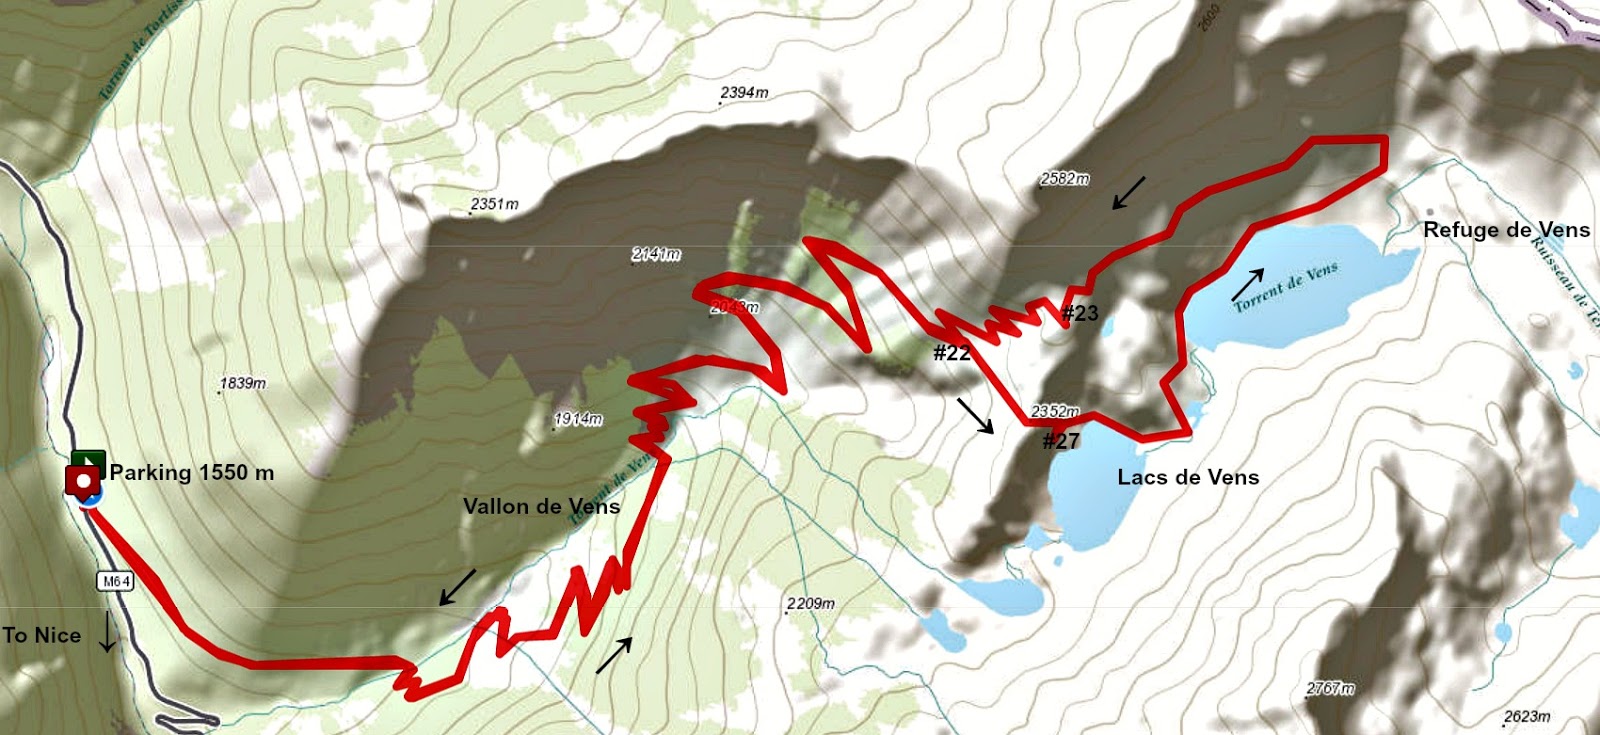 Lacs de Vens trail track